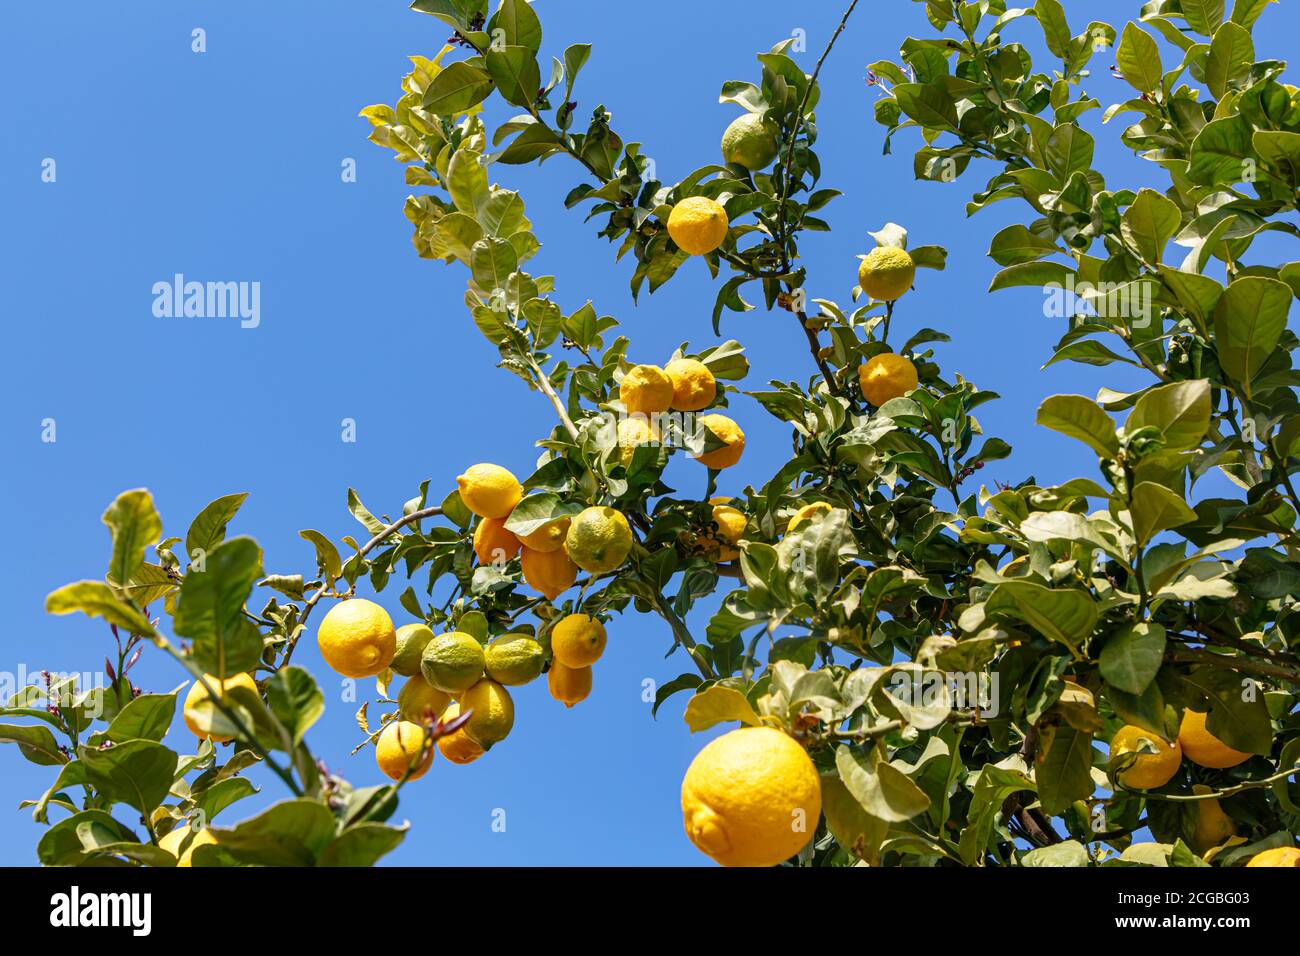 Yellow lemons grow on a tree Stock Photo